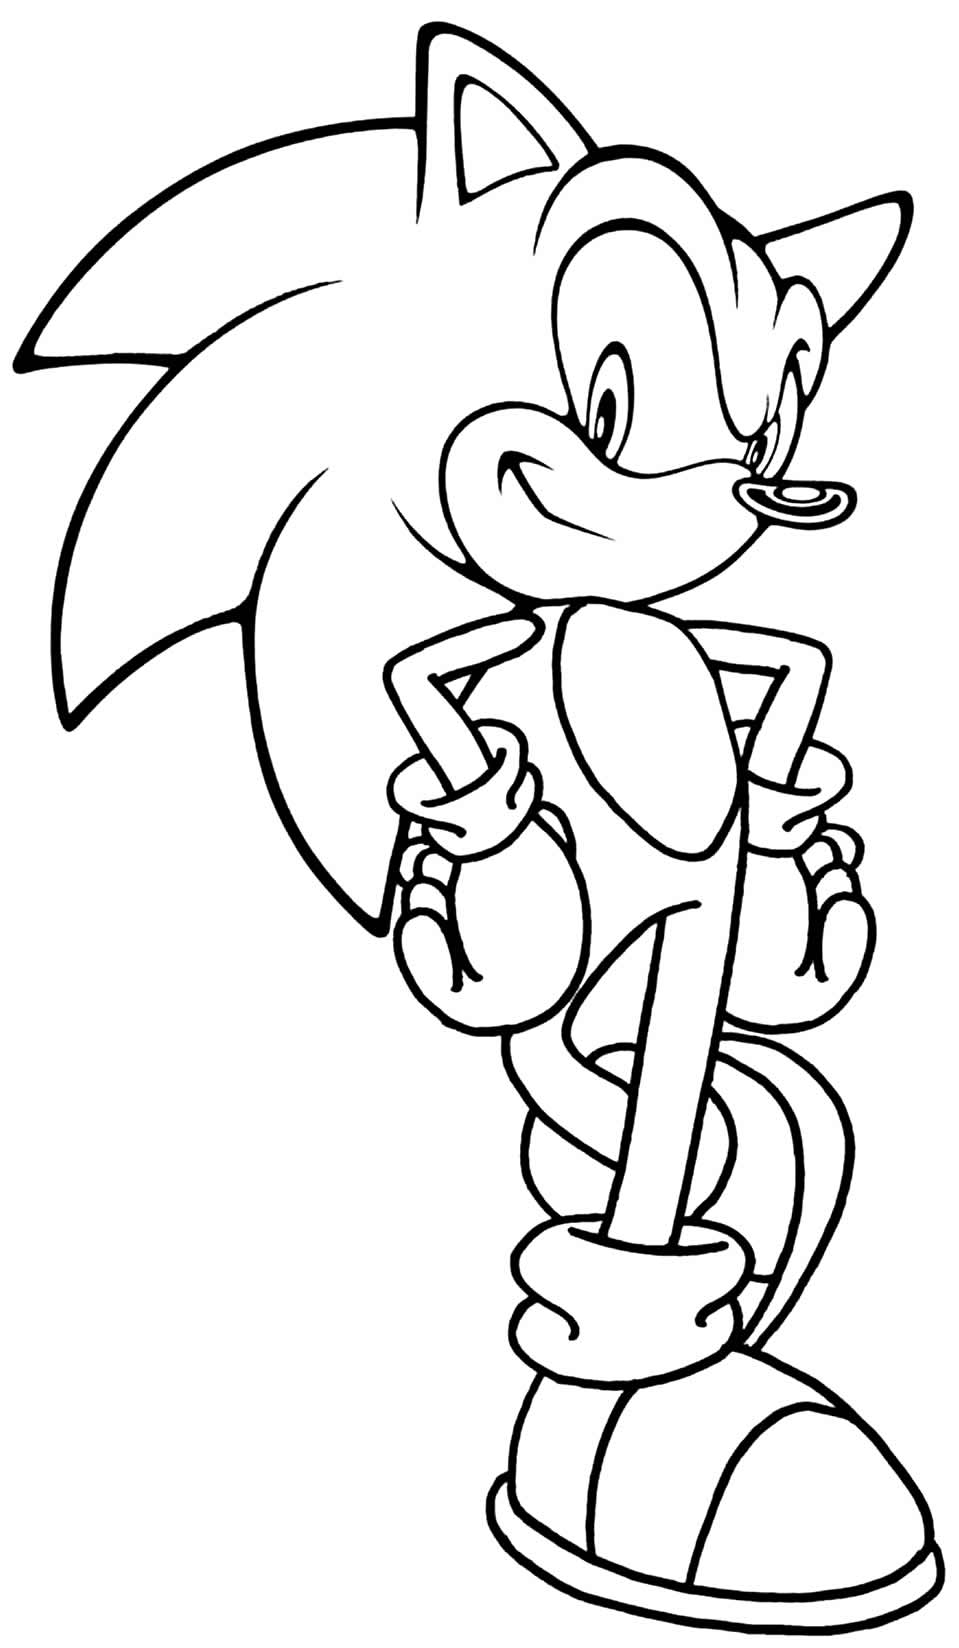 Imagem de Sonic para pintar